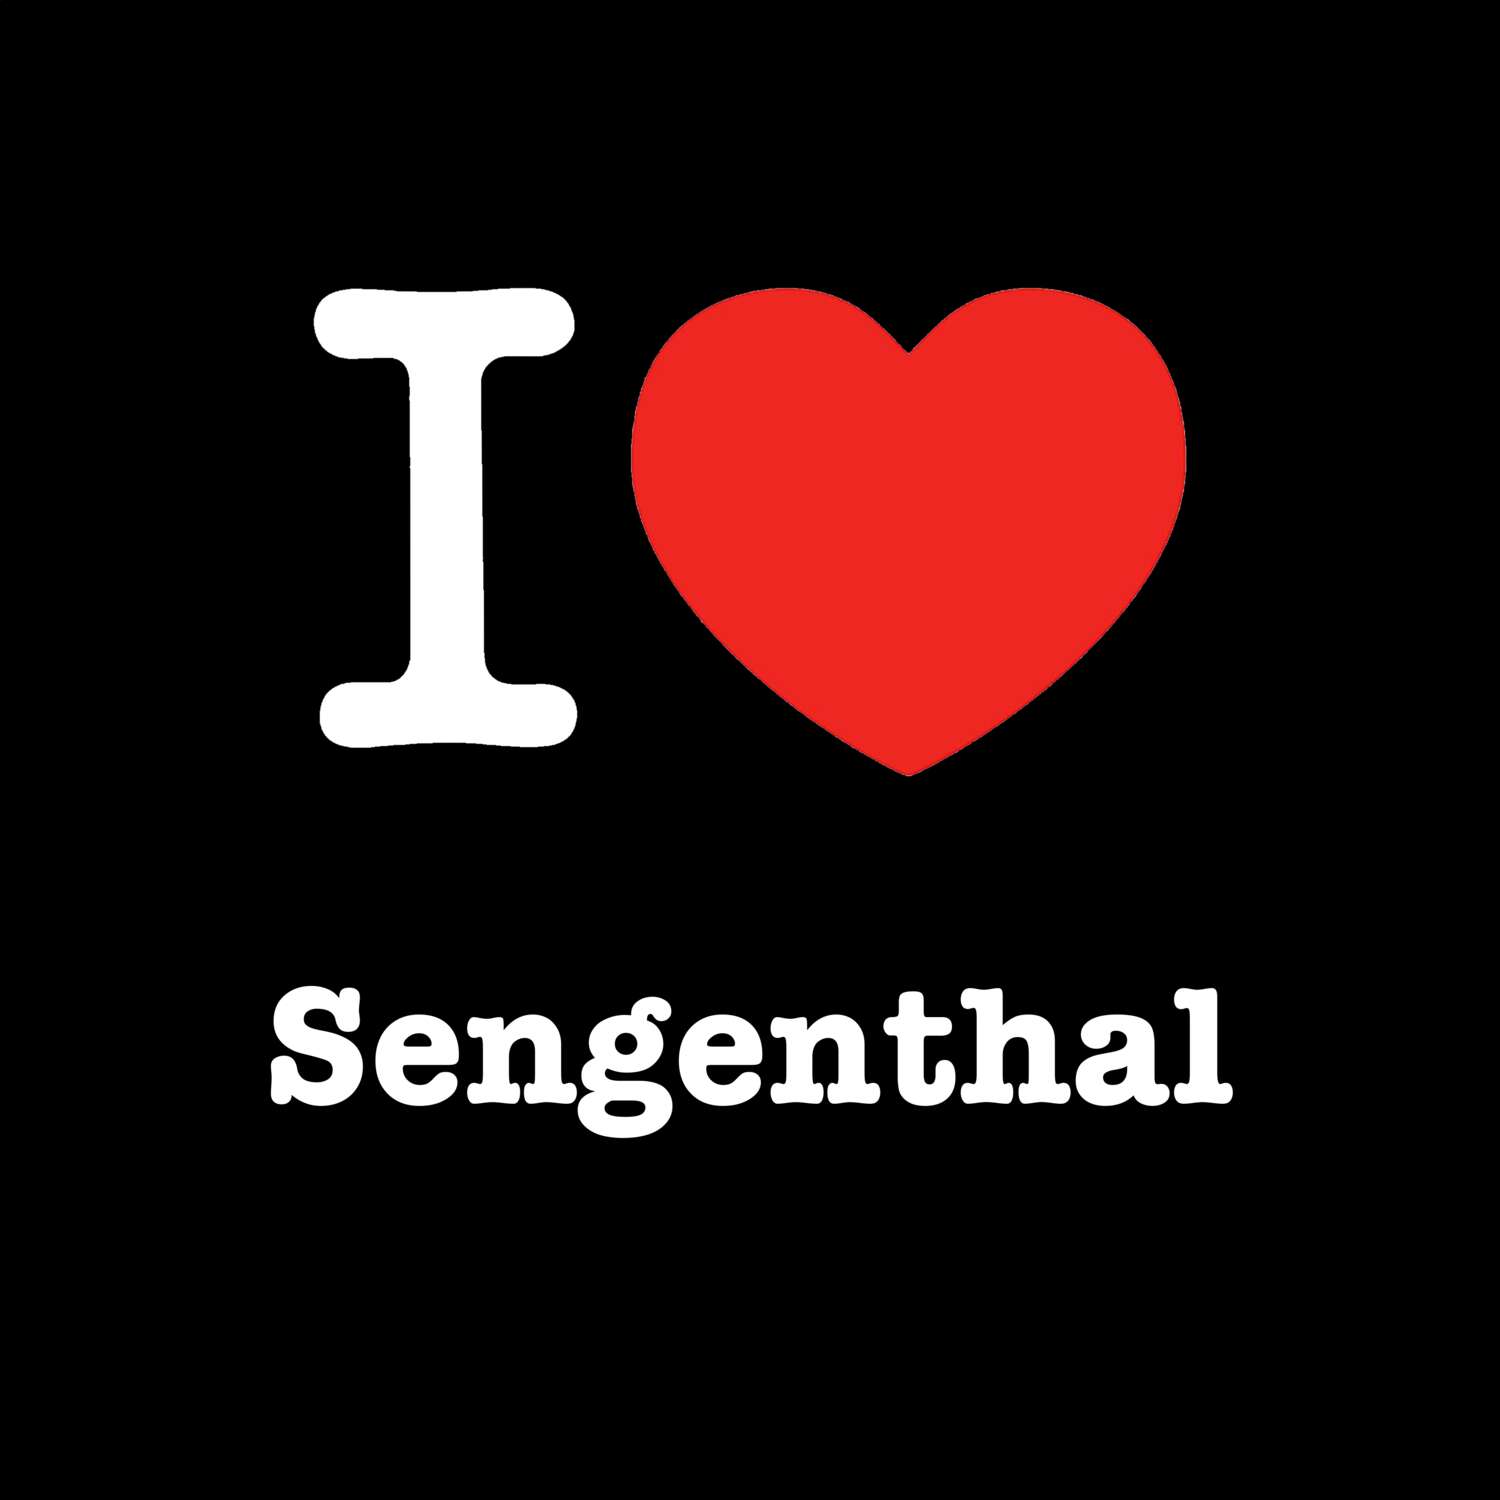 Sengenthal T-Shirt »I love«